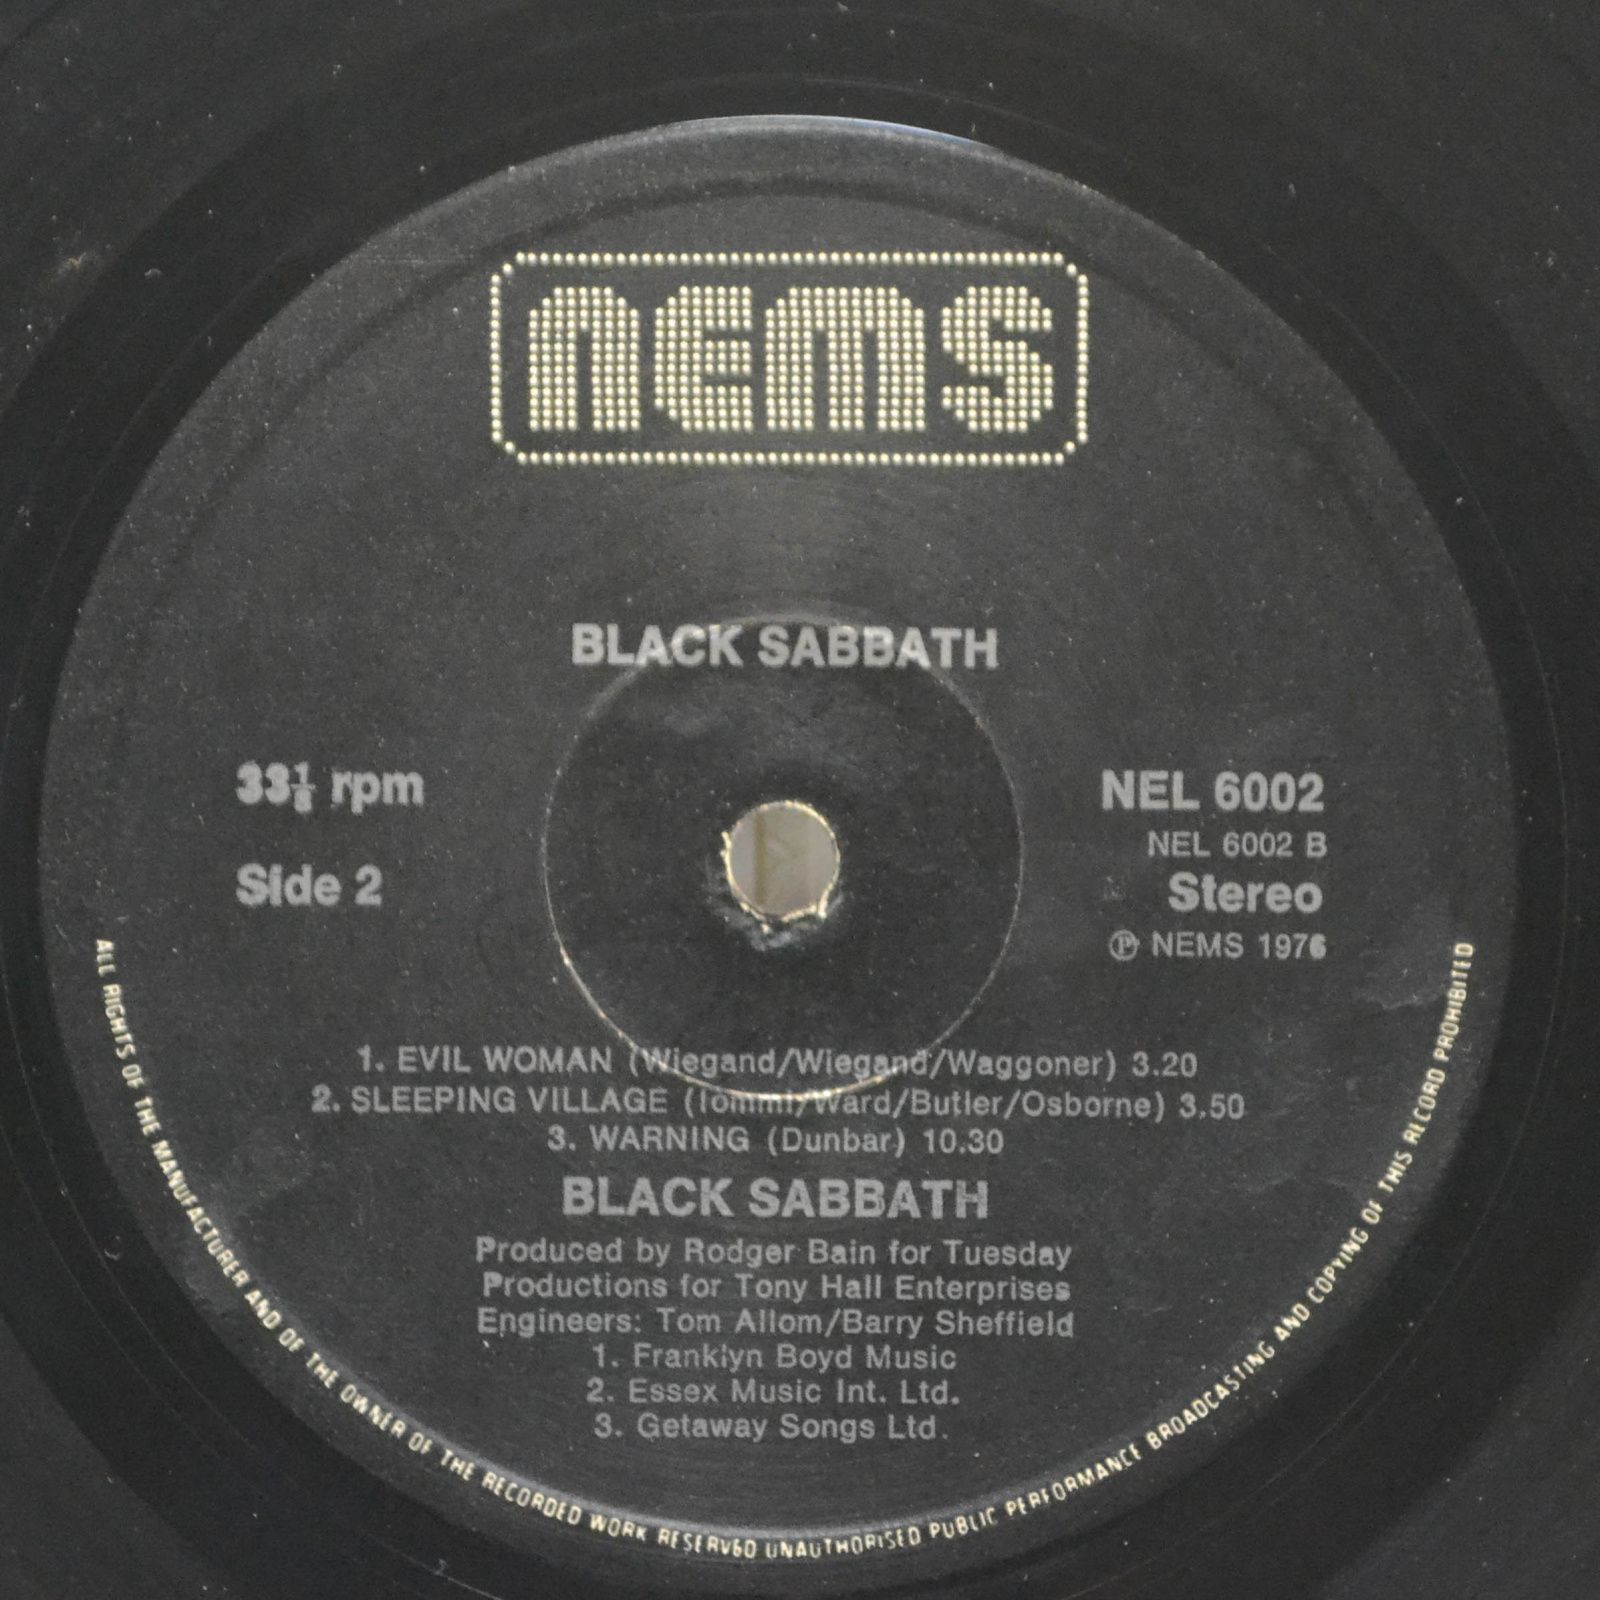 Black Sabbath — Black Sabbath, 1976